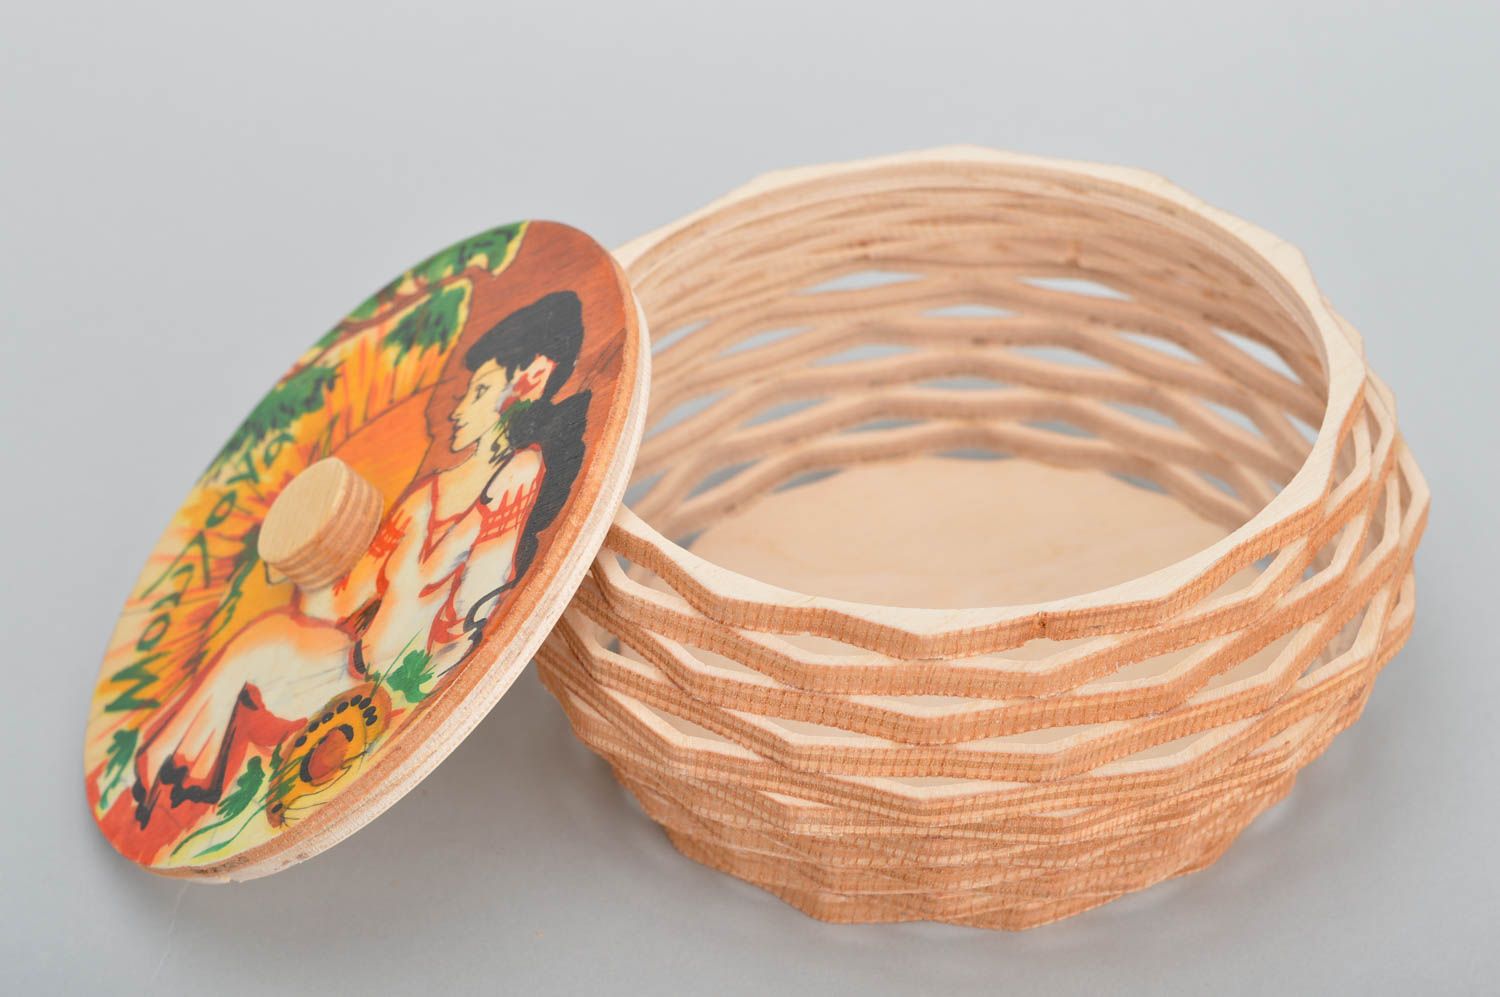 Runde Schatulle aus Holz bemalt ajour auffallend schön modisch handmade stilvoll foto 2